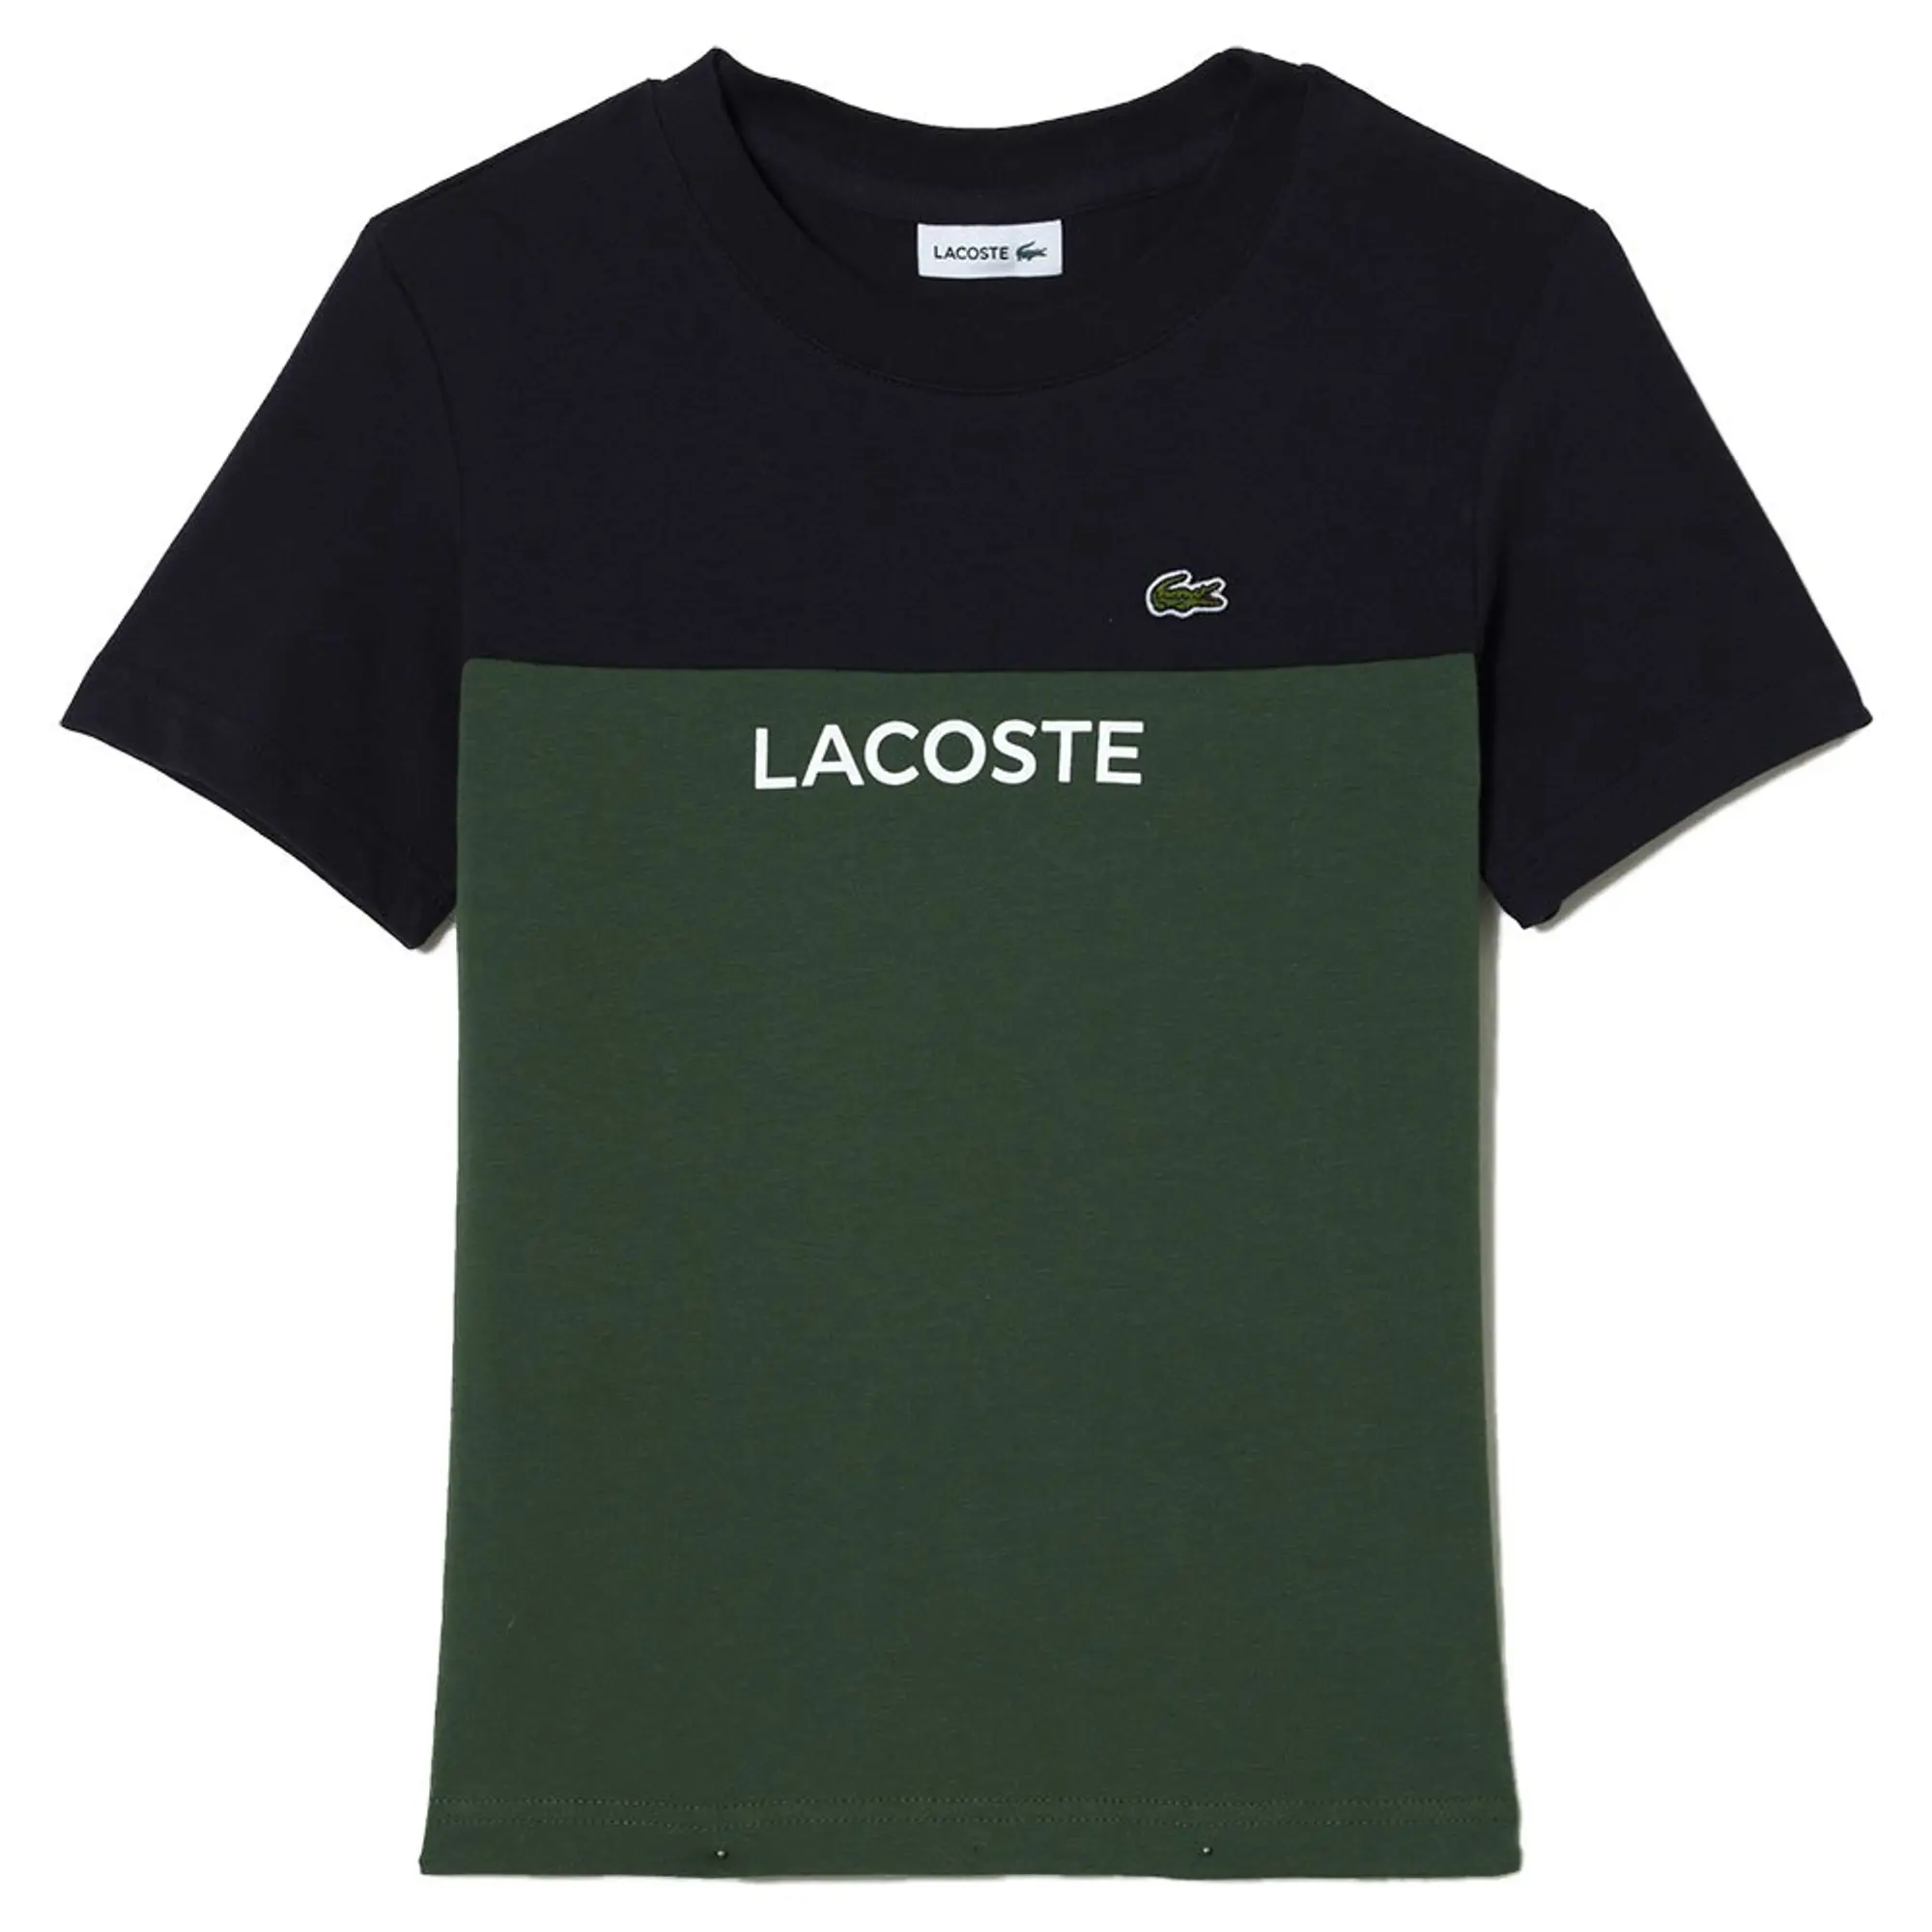 Lacoste Tj5289 Short Sleeve T-shirt  - Green,Black